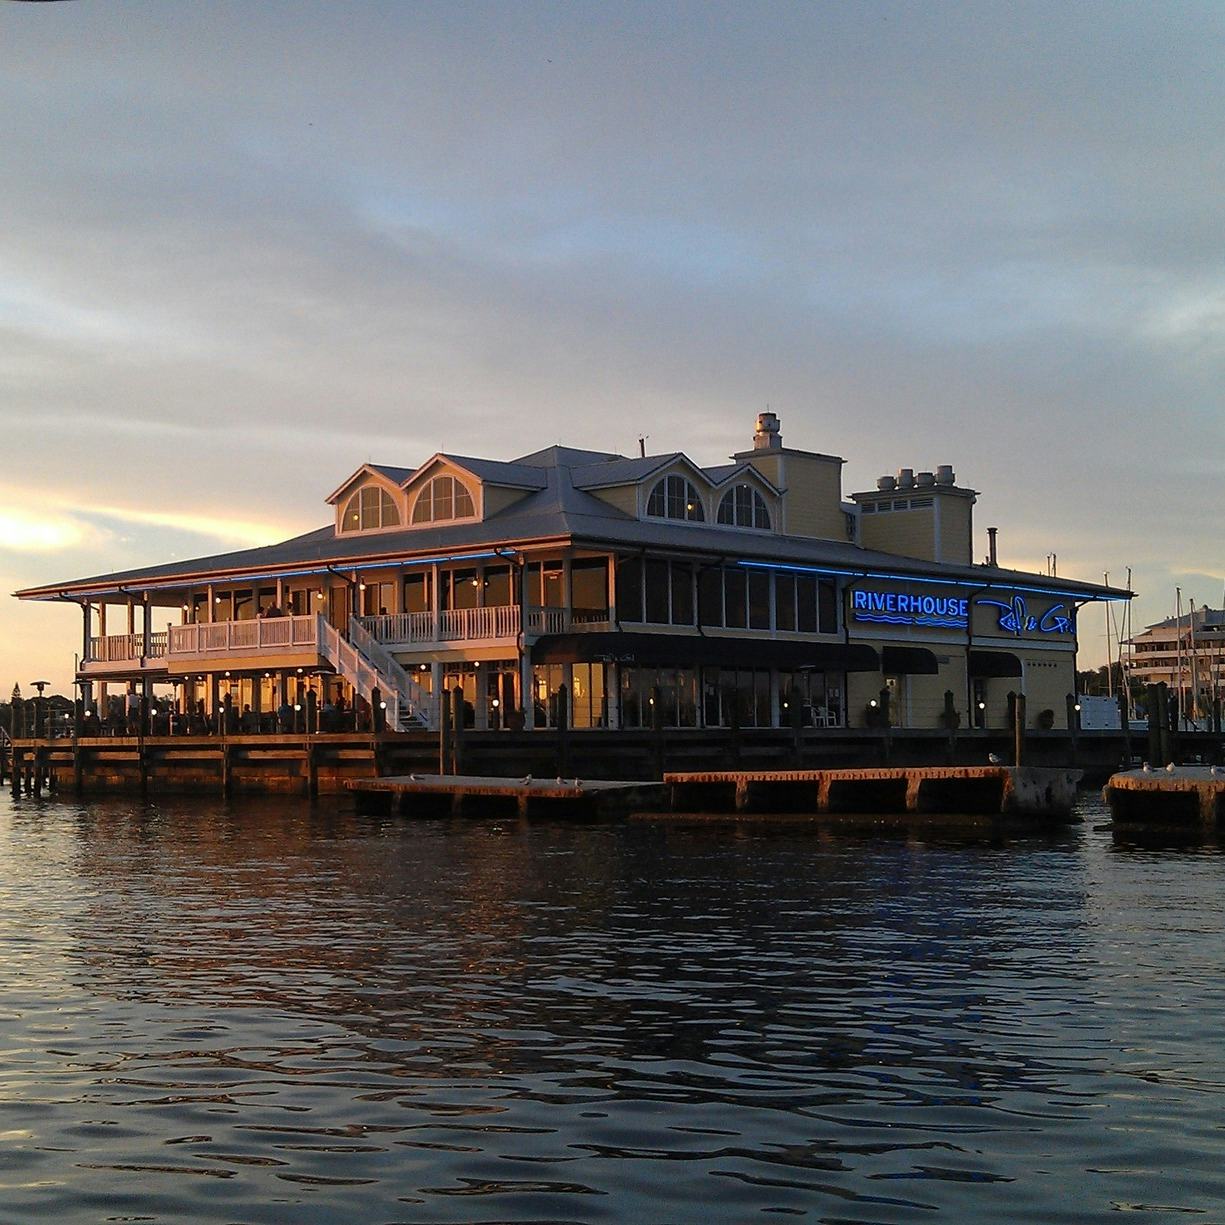 Riverhouse Waterfront Restaurant in Palmetto, FL